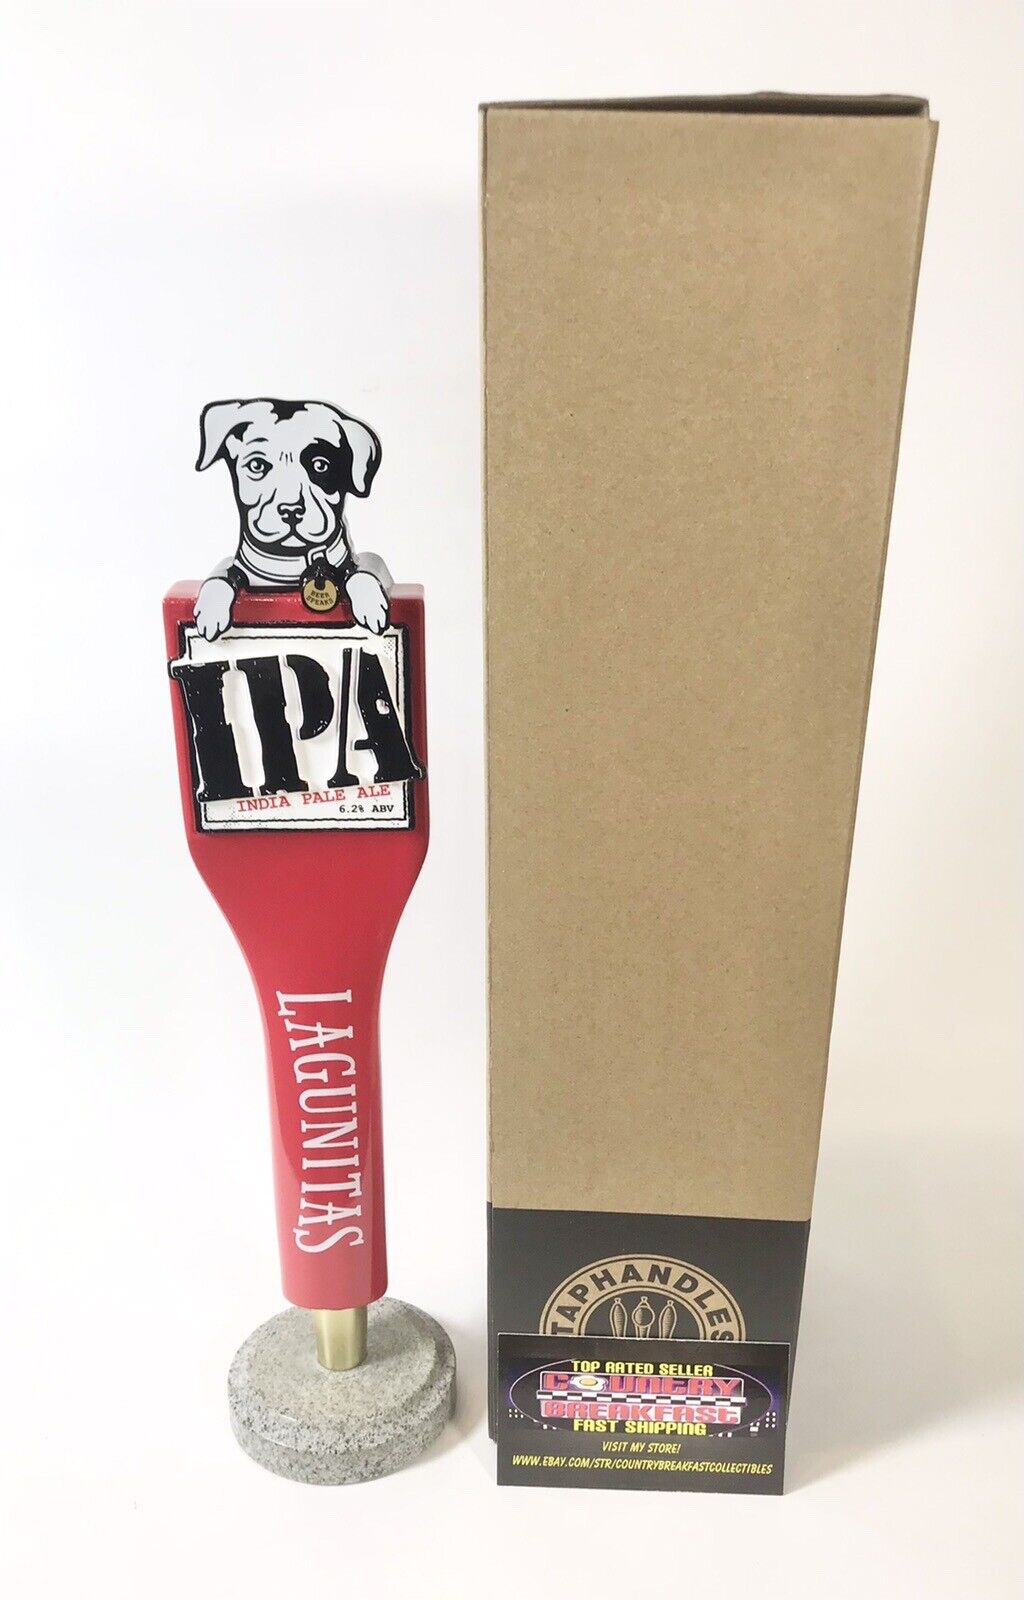 Lagunitas Brewing Company IPA Dog Beer Tap Handle 12” Tall - Brand New In Box